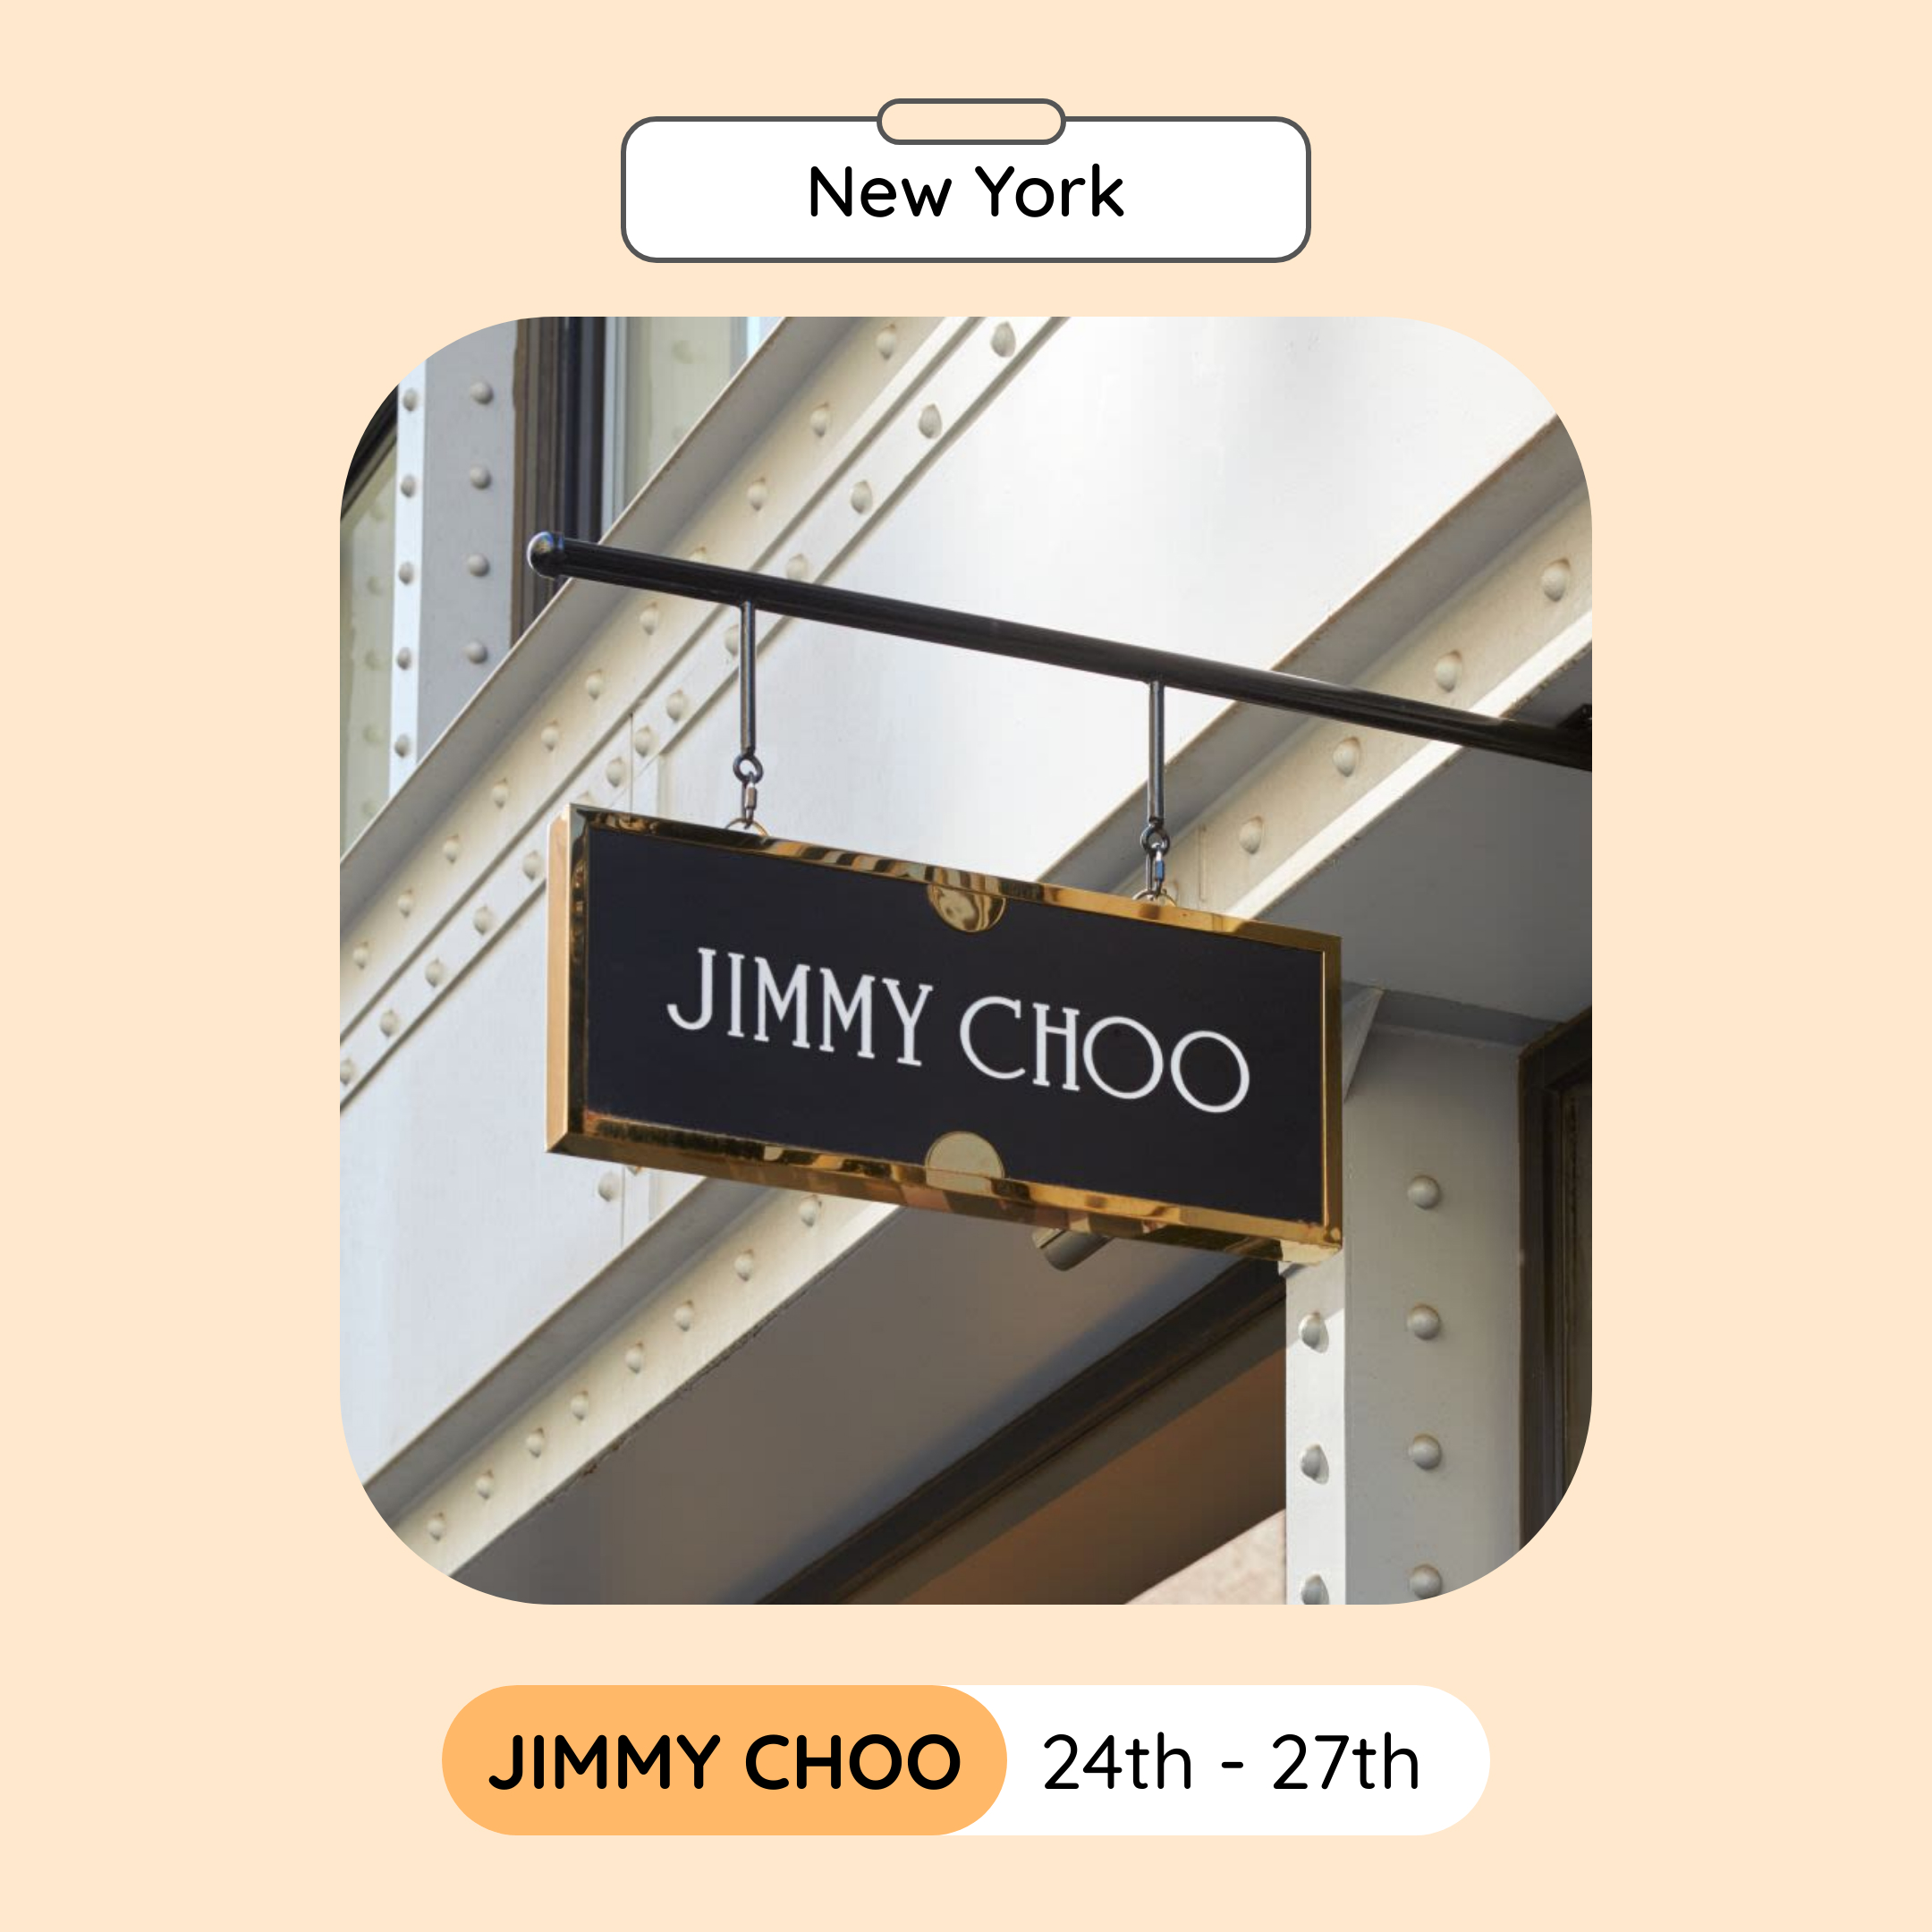 JIMMY CHOO SAMPLE SALE SHOPPING INCLU PRICES